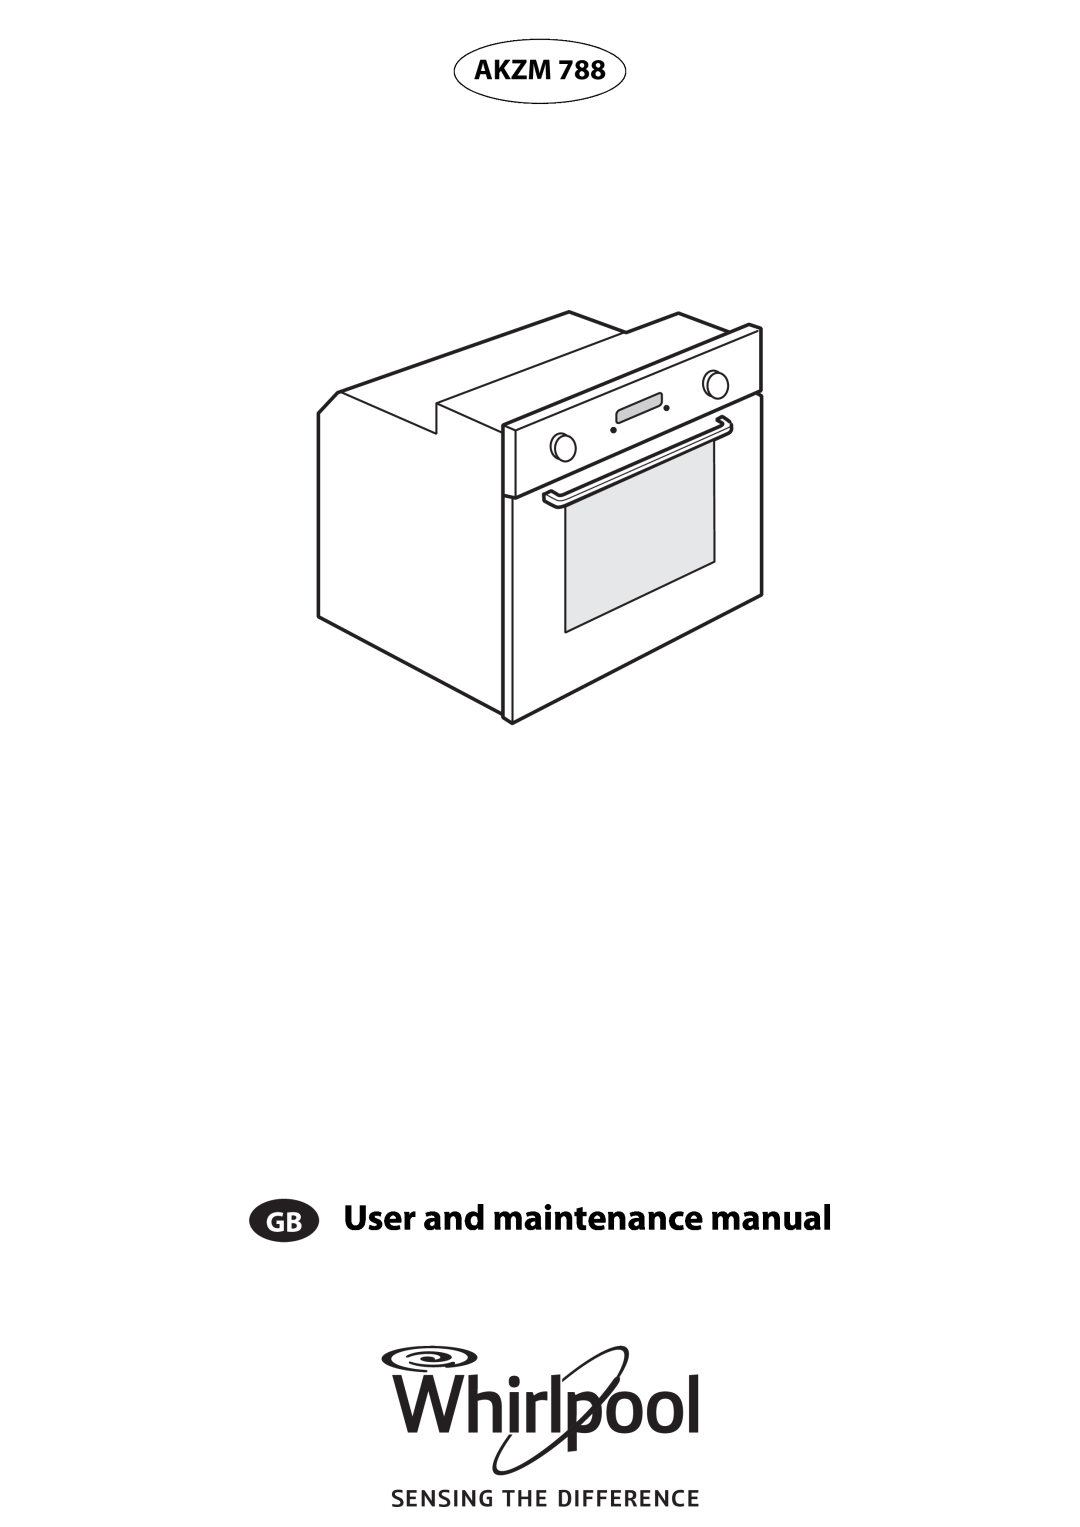 Whirlpool AKZM 788 manual Akzm, User and maintenance manual 